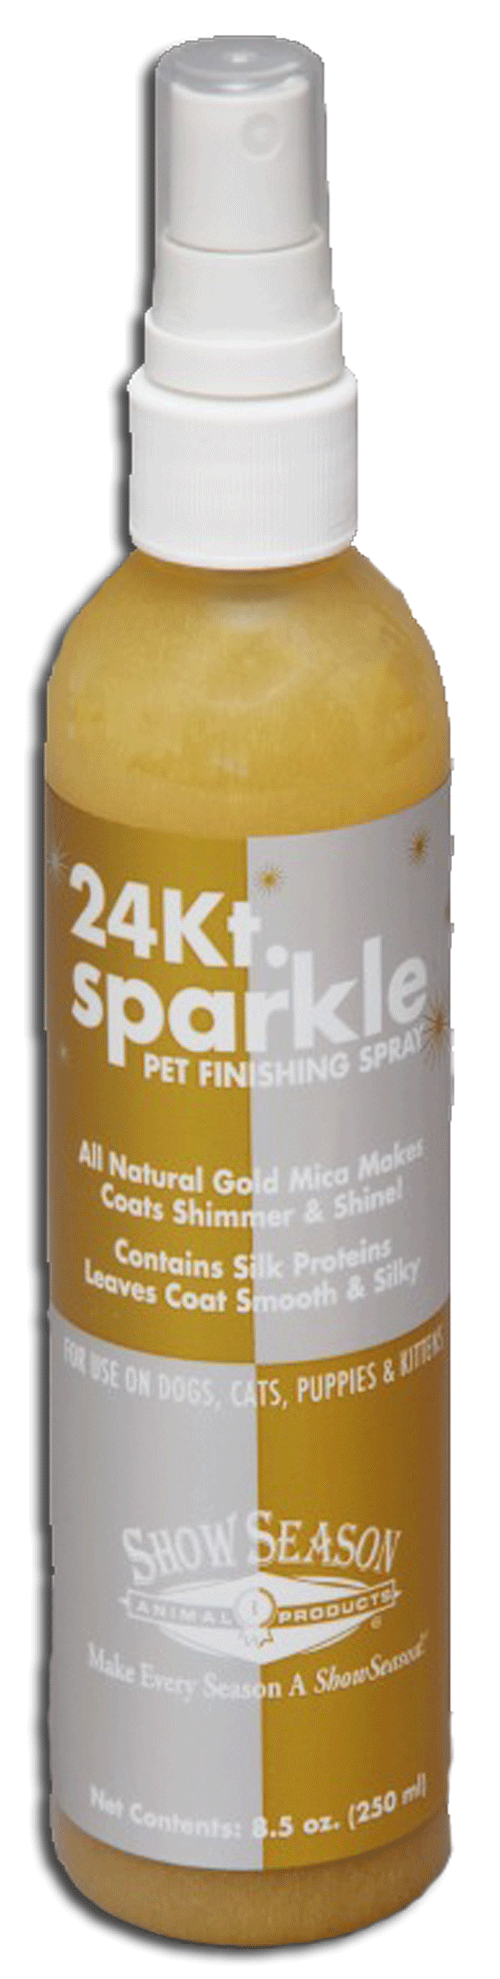 Show Season Sparkle Spray Gold